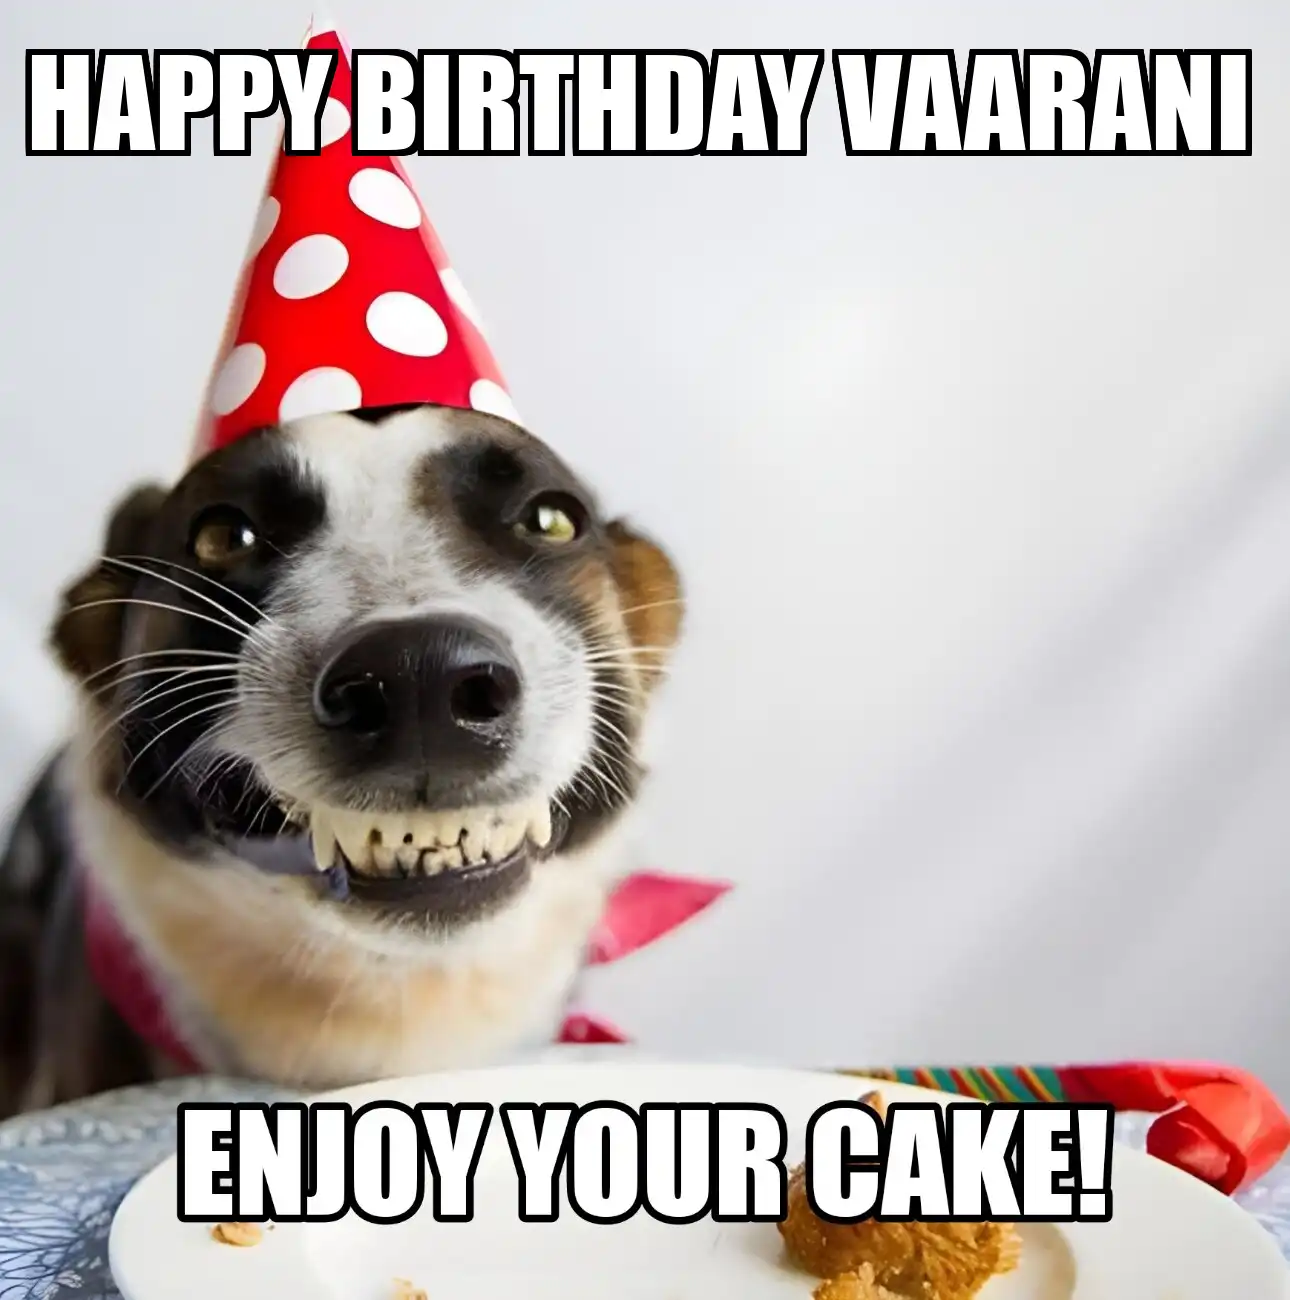 Happy Birthday Vaarani Enjoy Your Cake Dog Meme